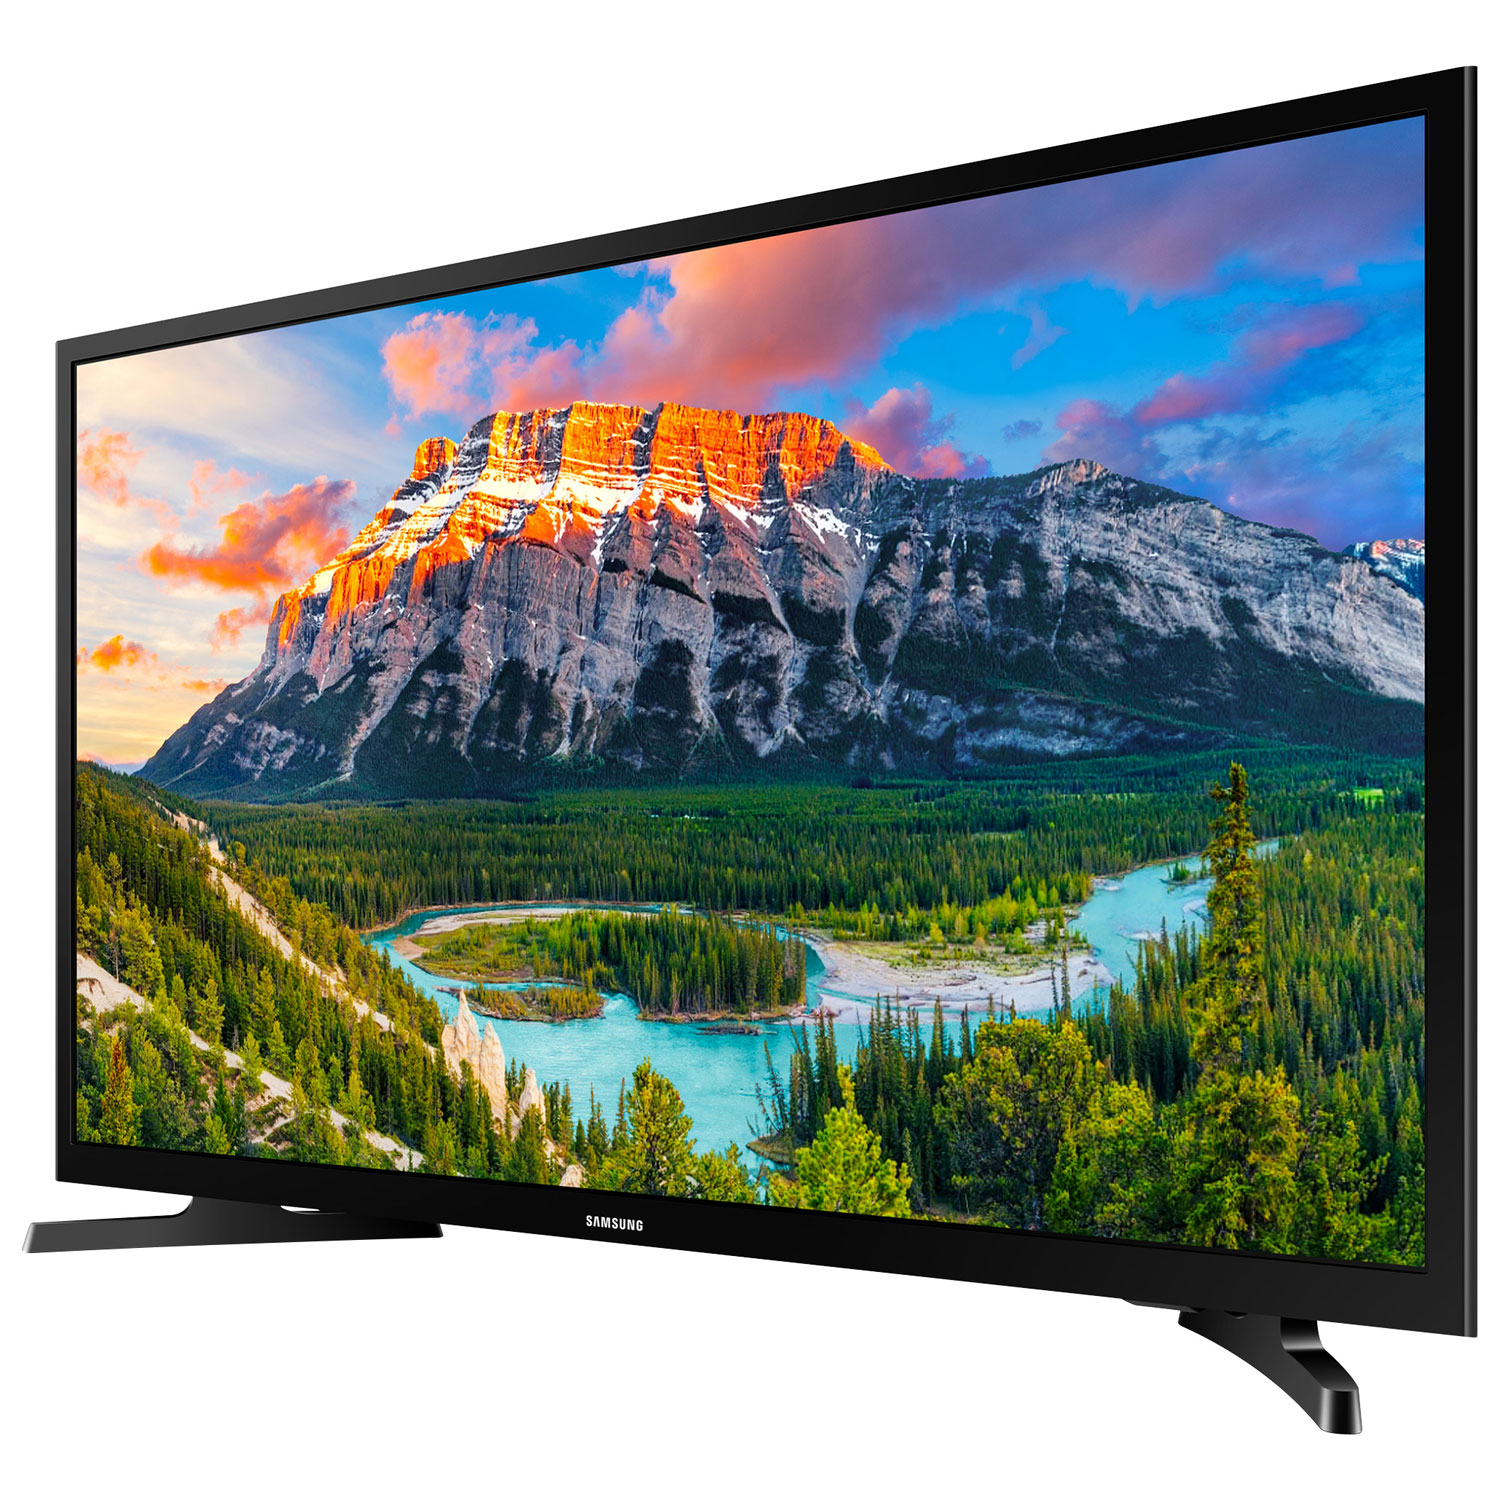 Samsung 43" 1080p HD LED Tizen Smart TV